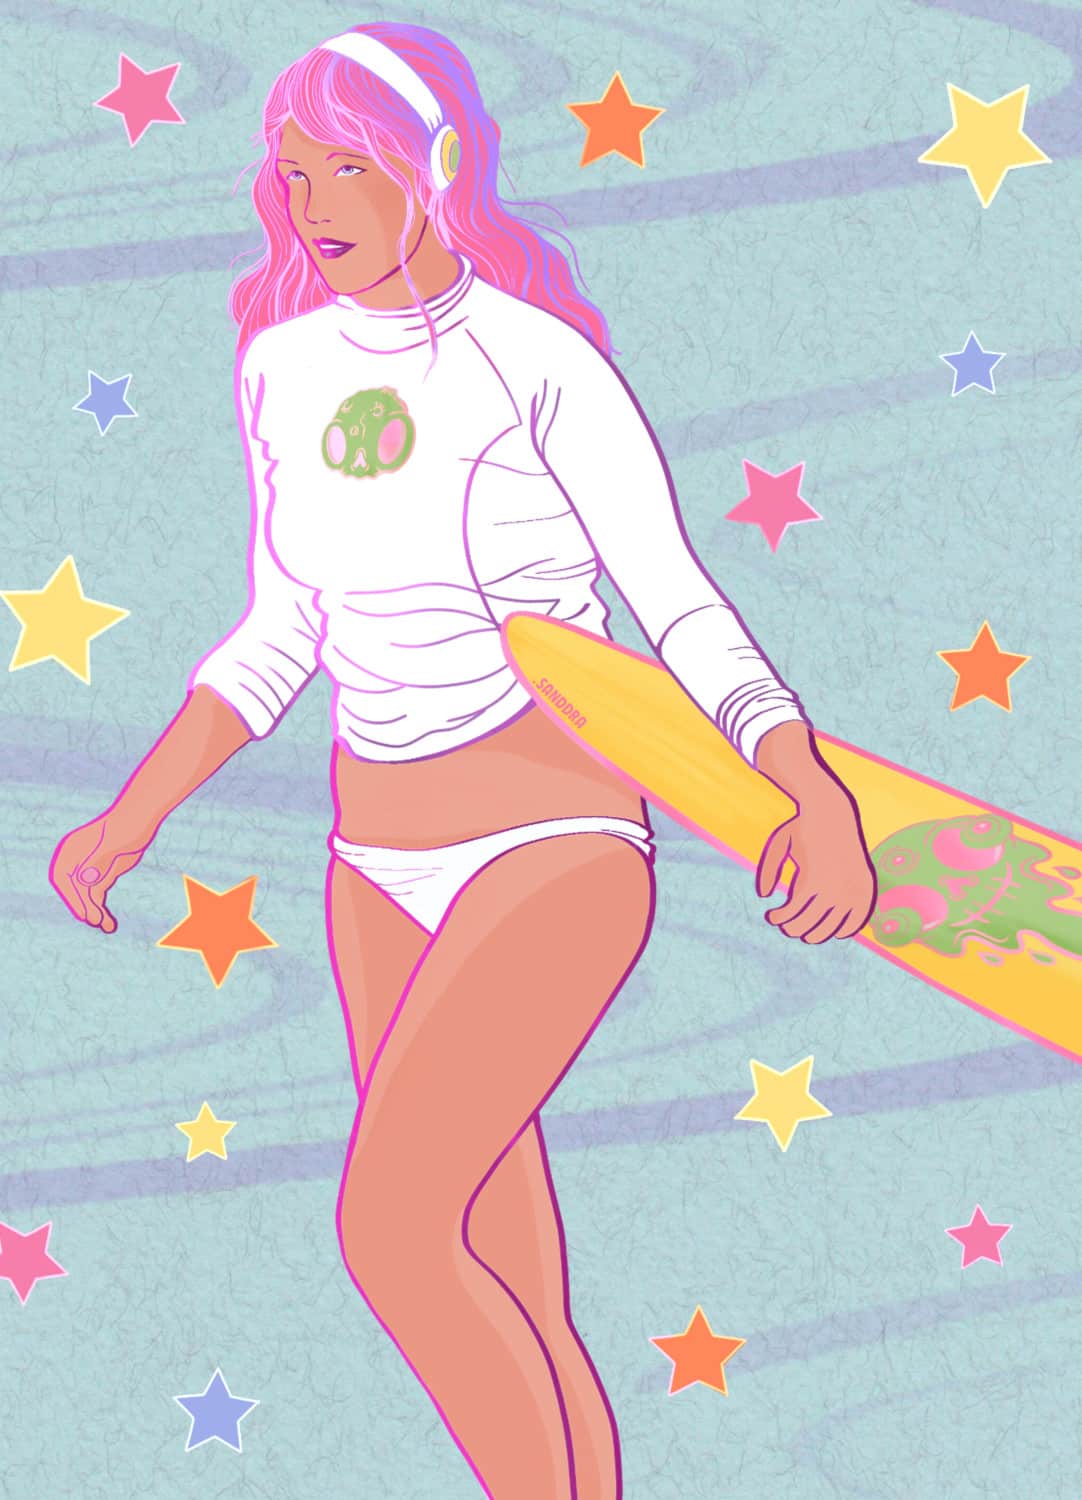 Pink hair surfer girl illustration